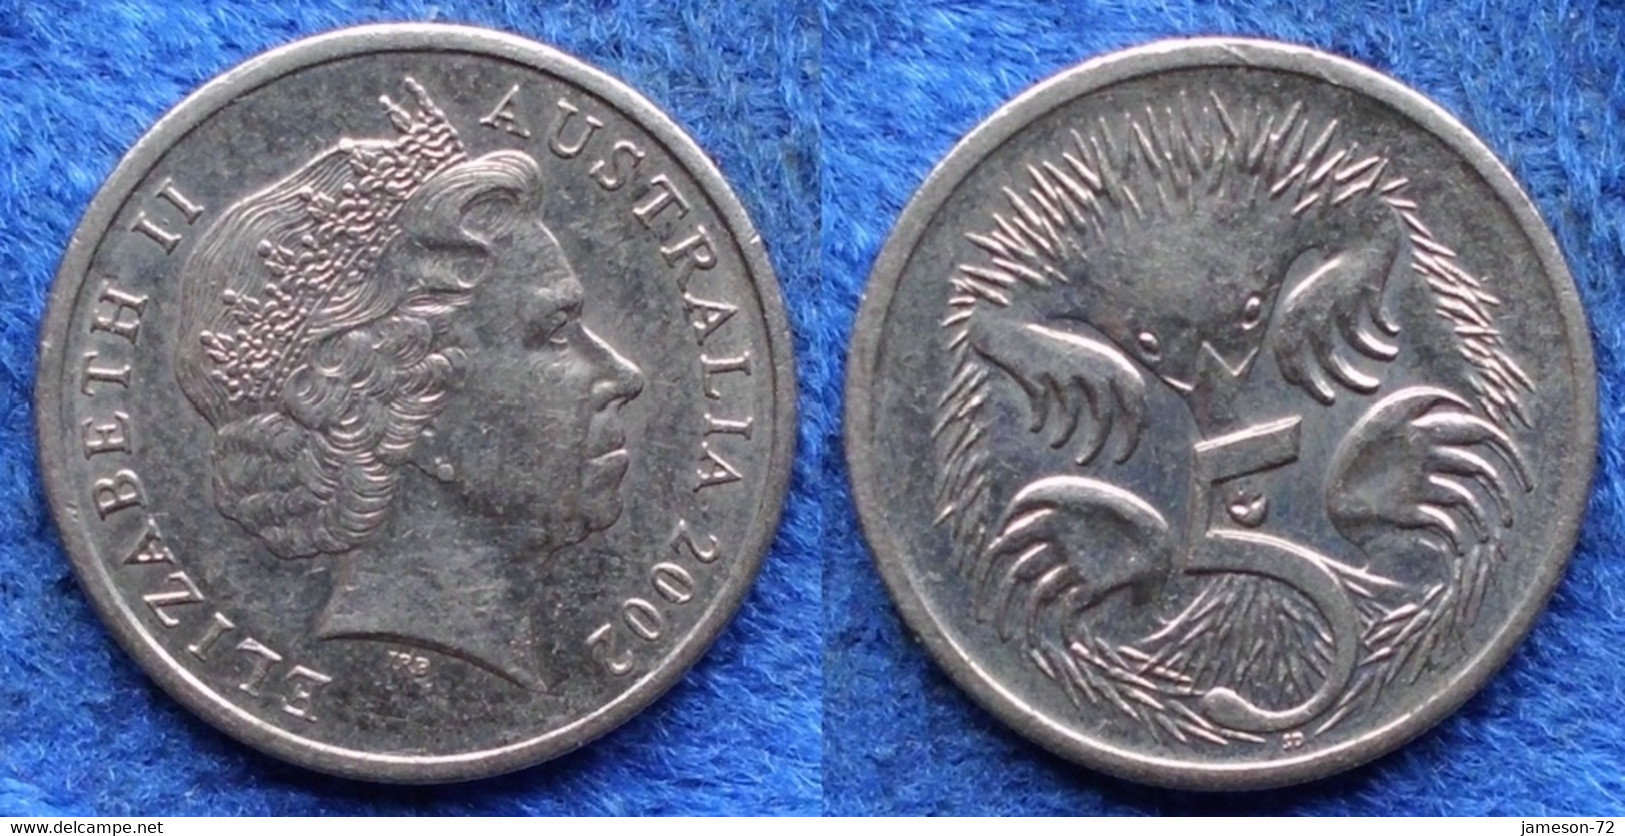 AUSTRALIA - 5 Cents 2002 "echidna" KM# 401 Elizabeth II Decimal - Edelweiss Coins - Unclassified